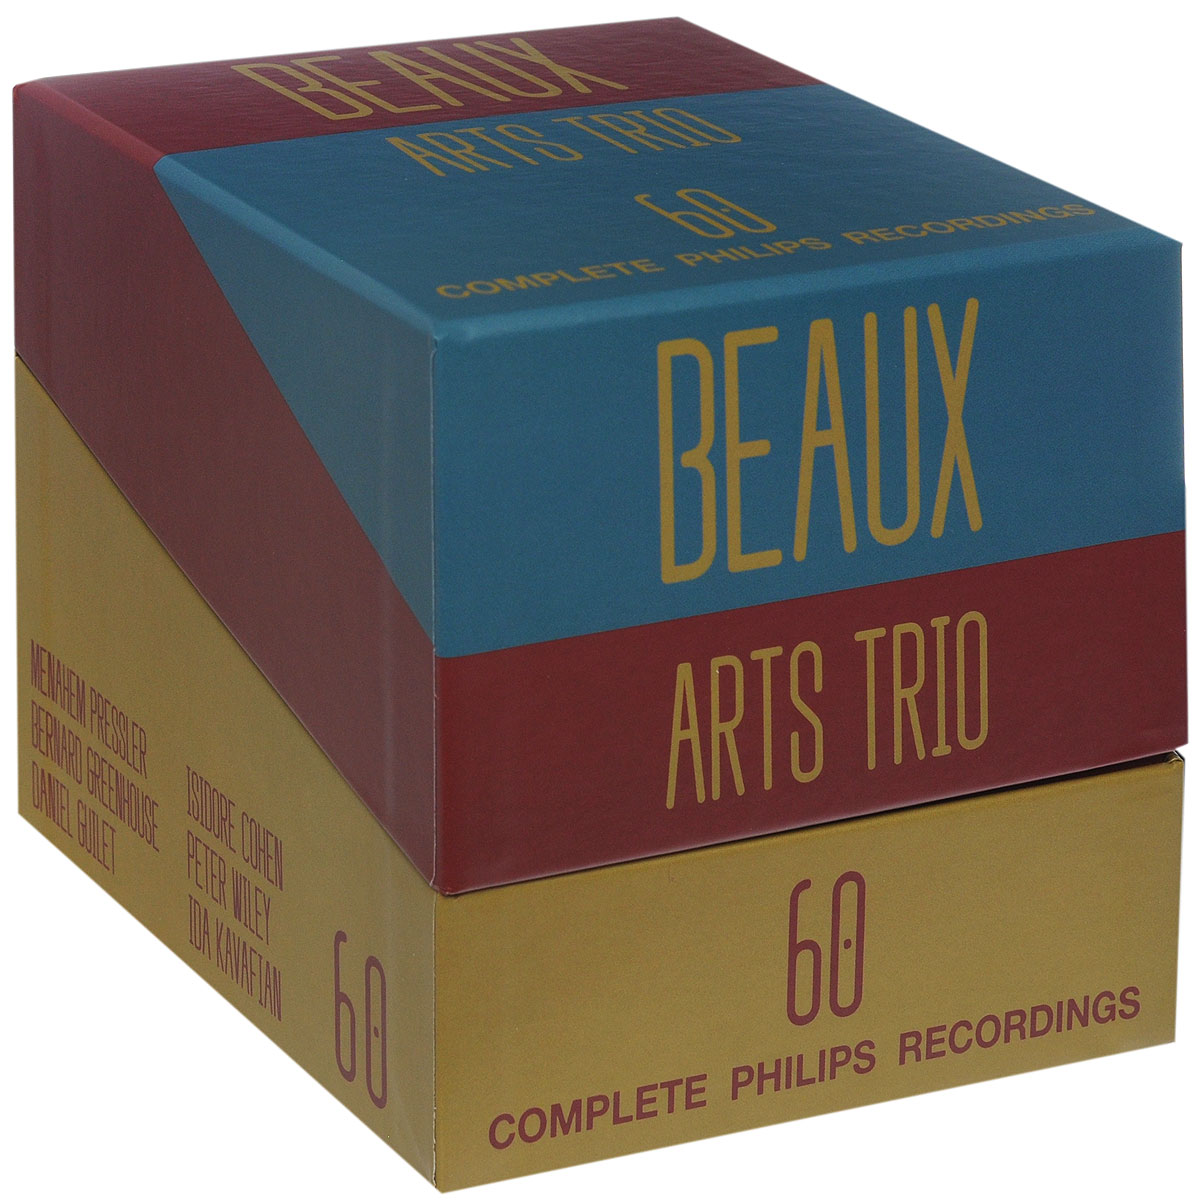 Beaux Arts Trio. Complete Recordings (60 CD)